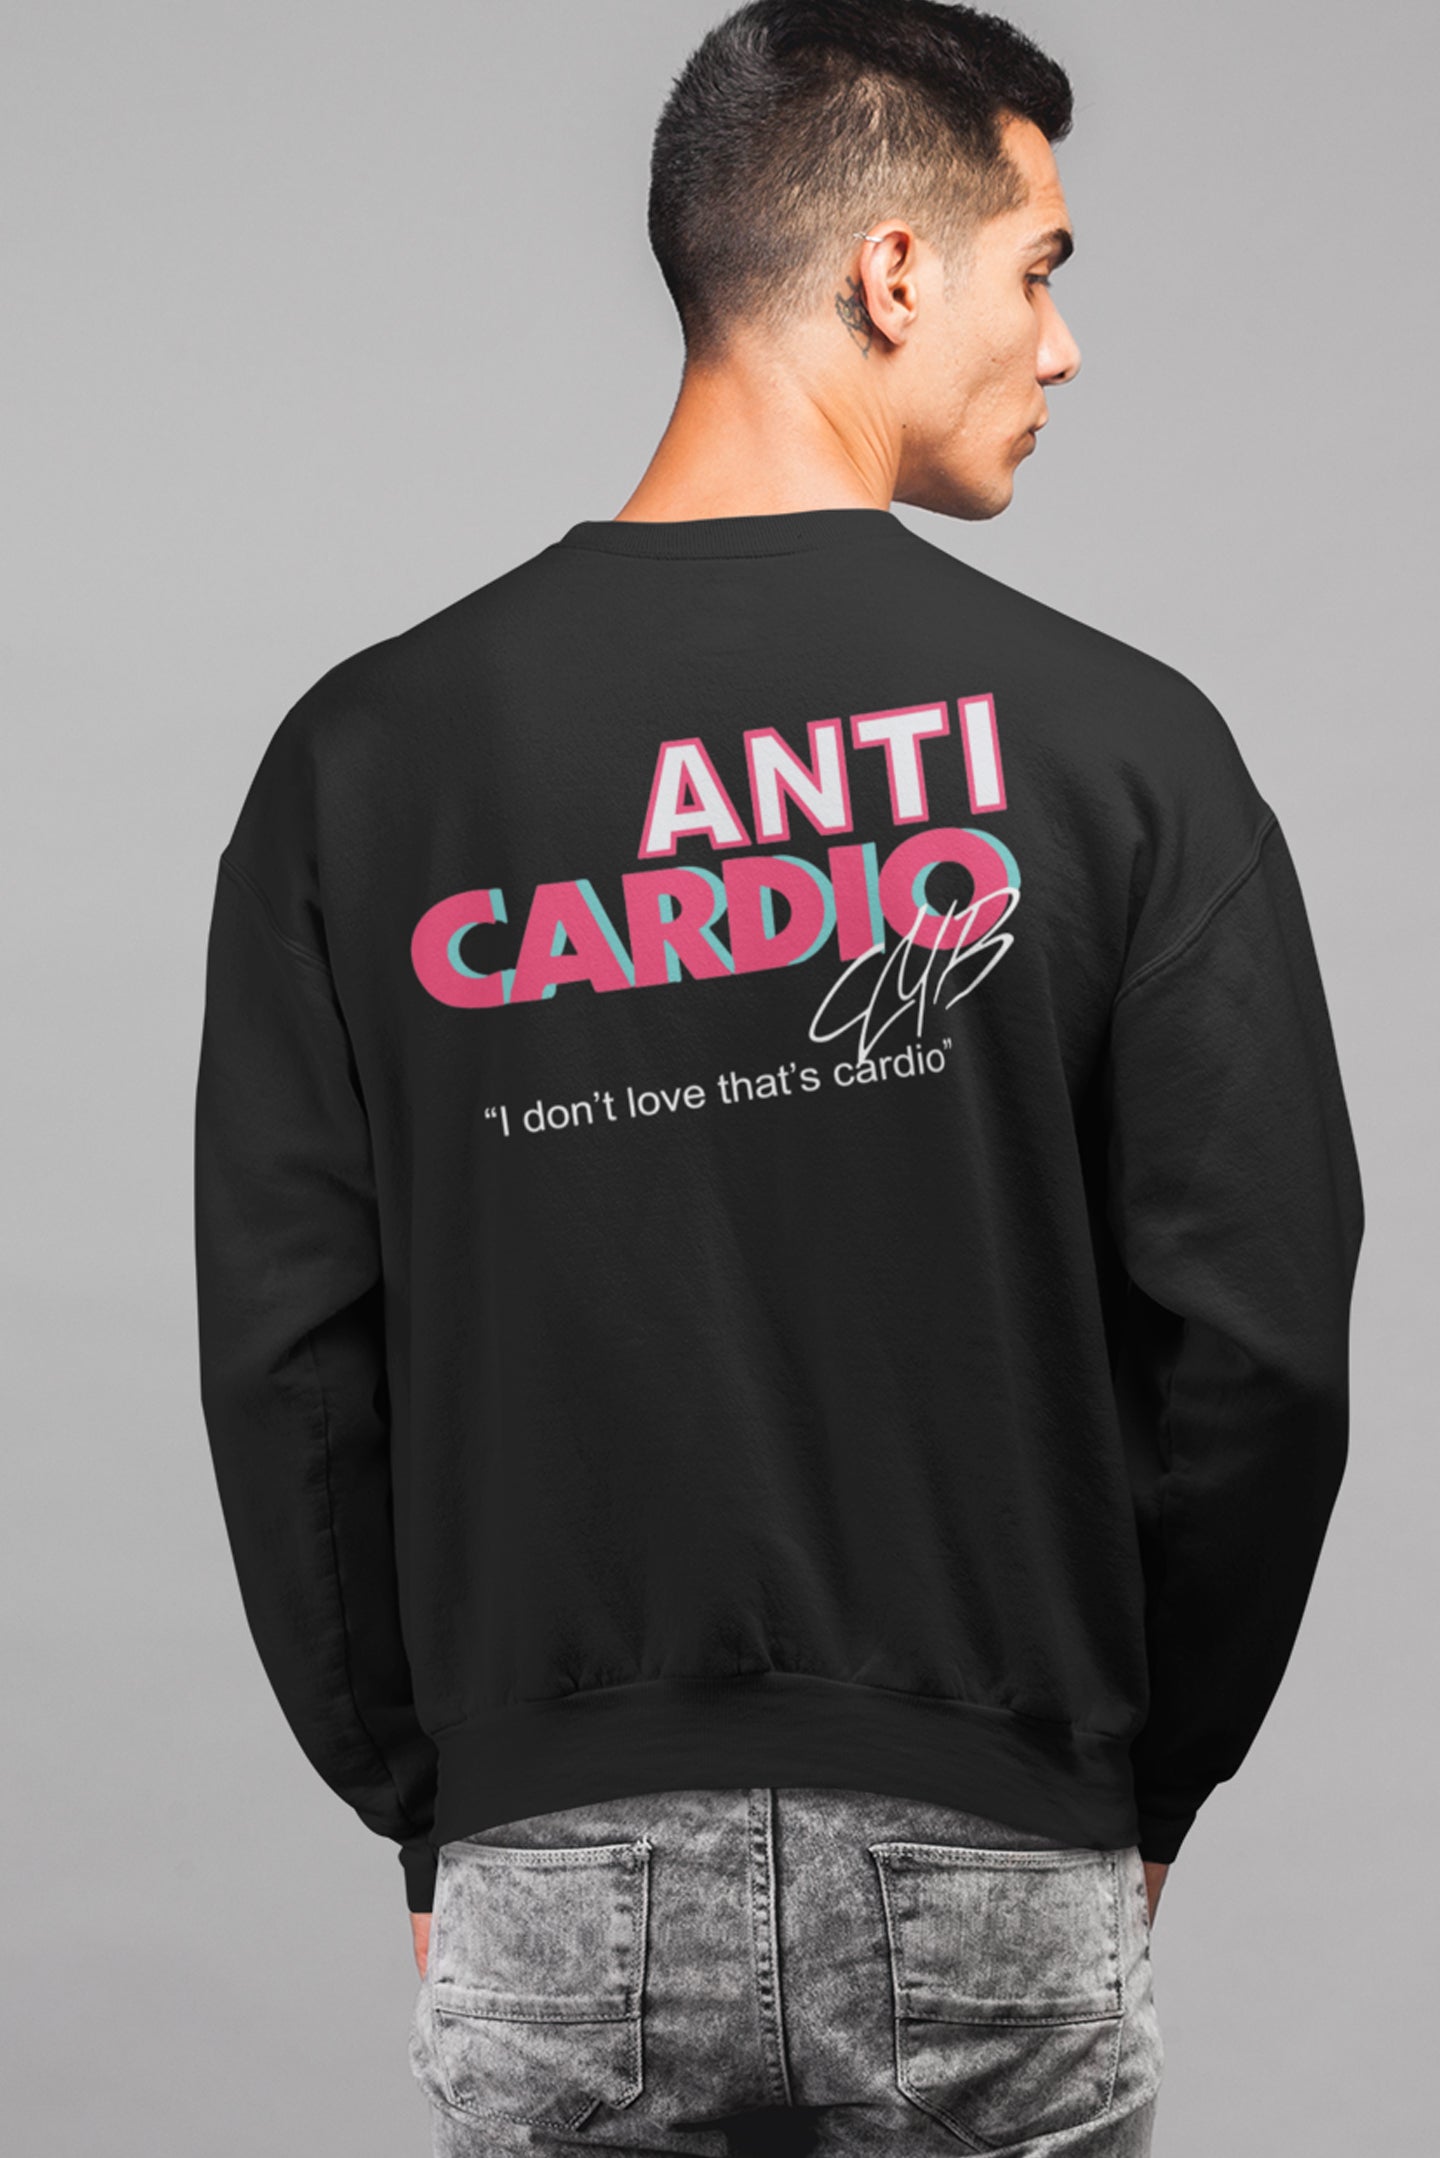 Anti Cardio Club Relaxed Fit Sweatshirt For Men